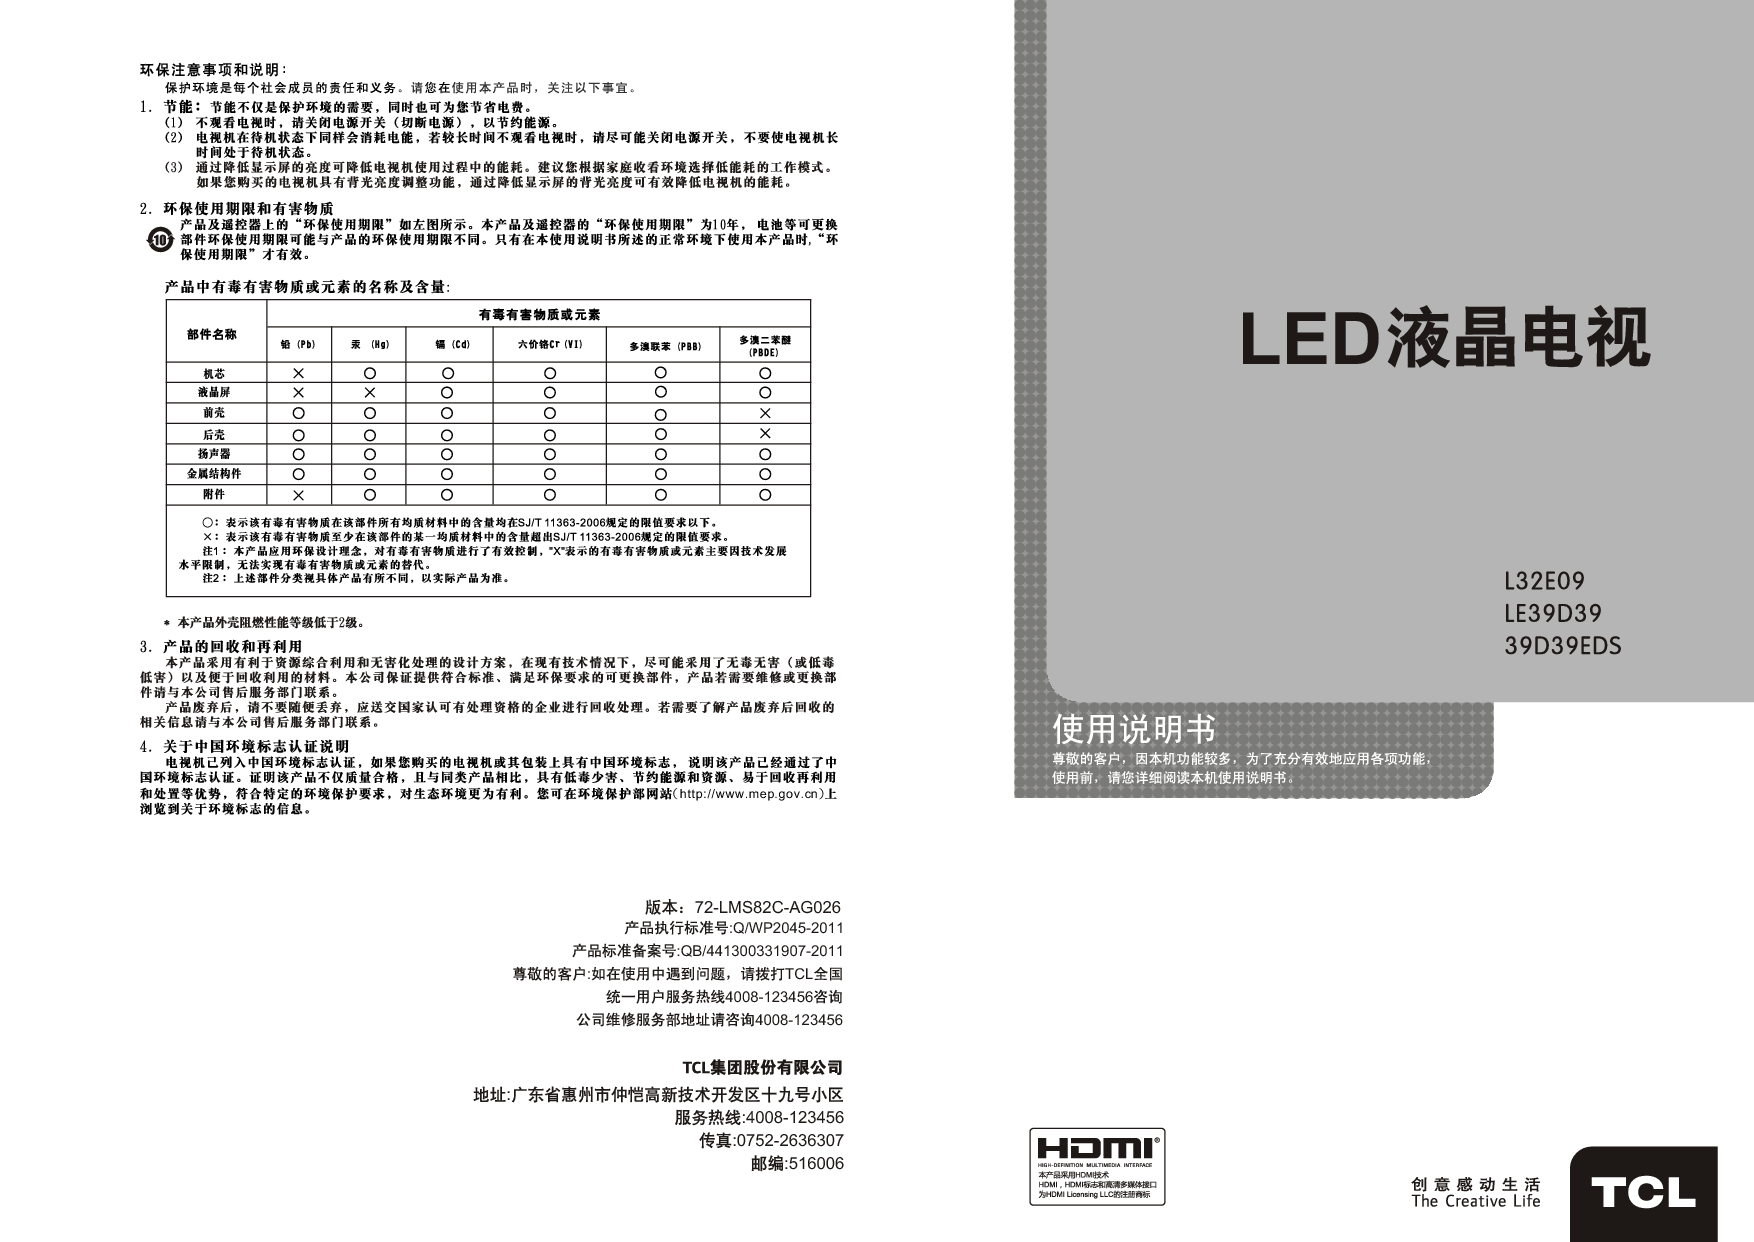 TCL 39D39EDS, L32E09 使用说明书 封面